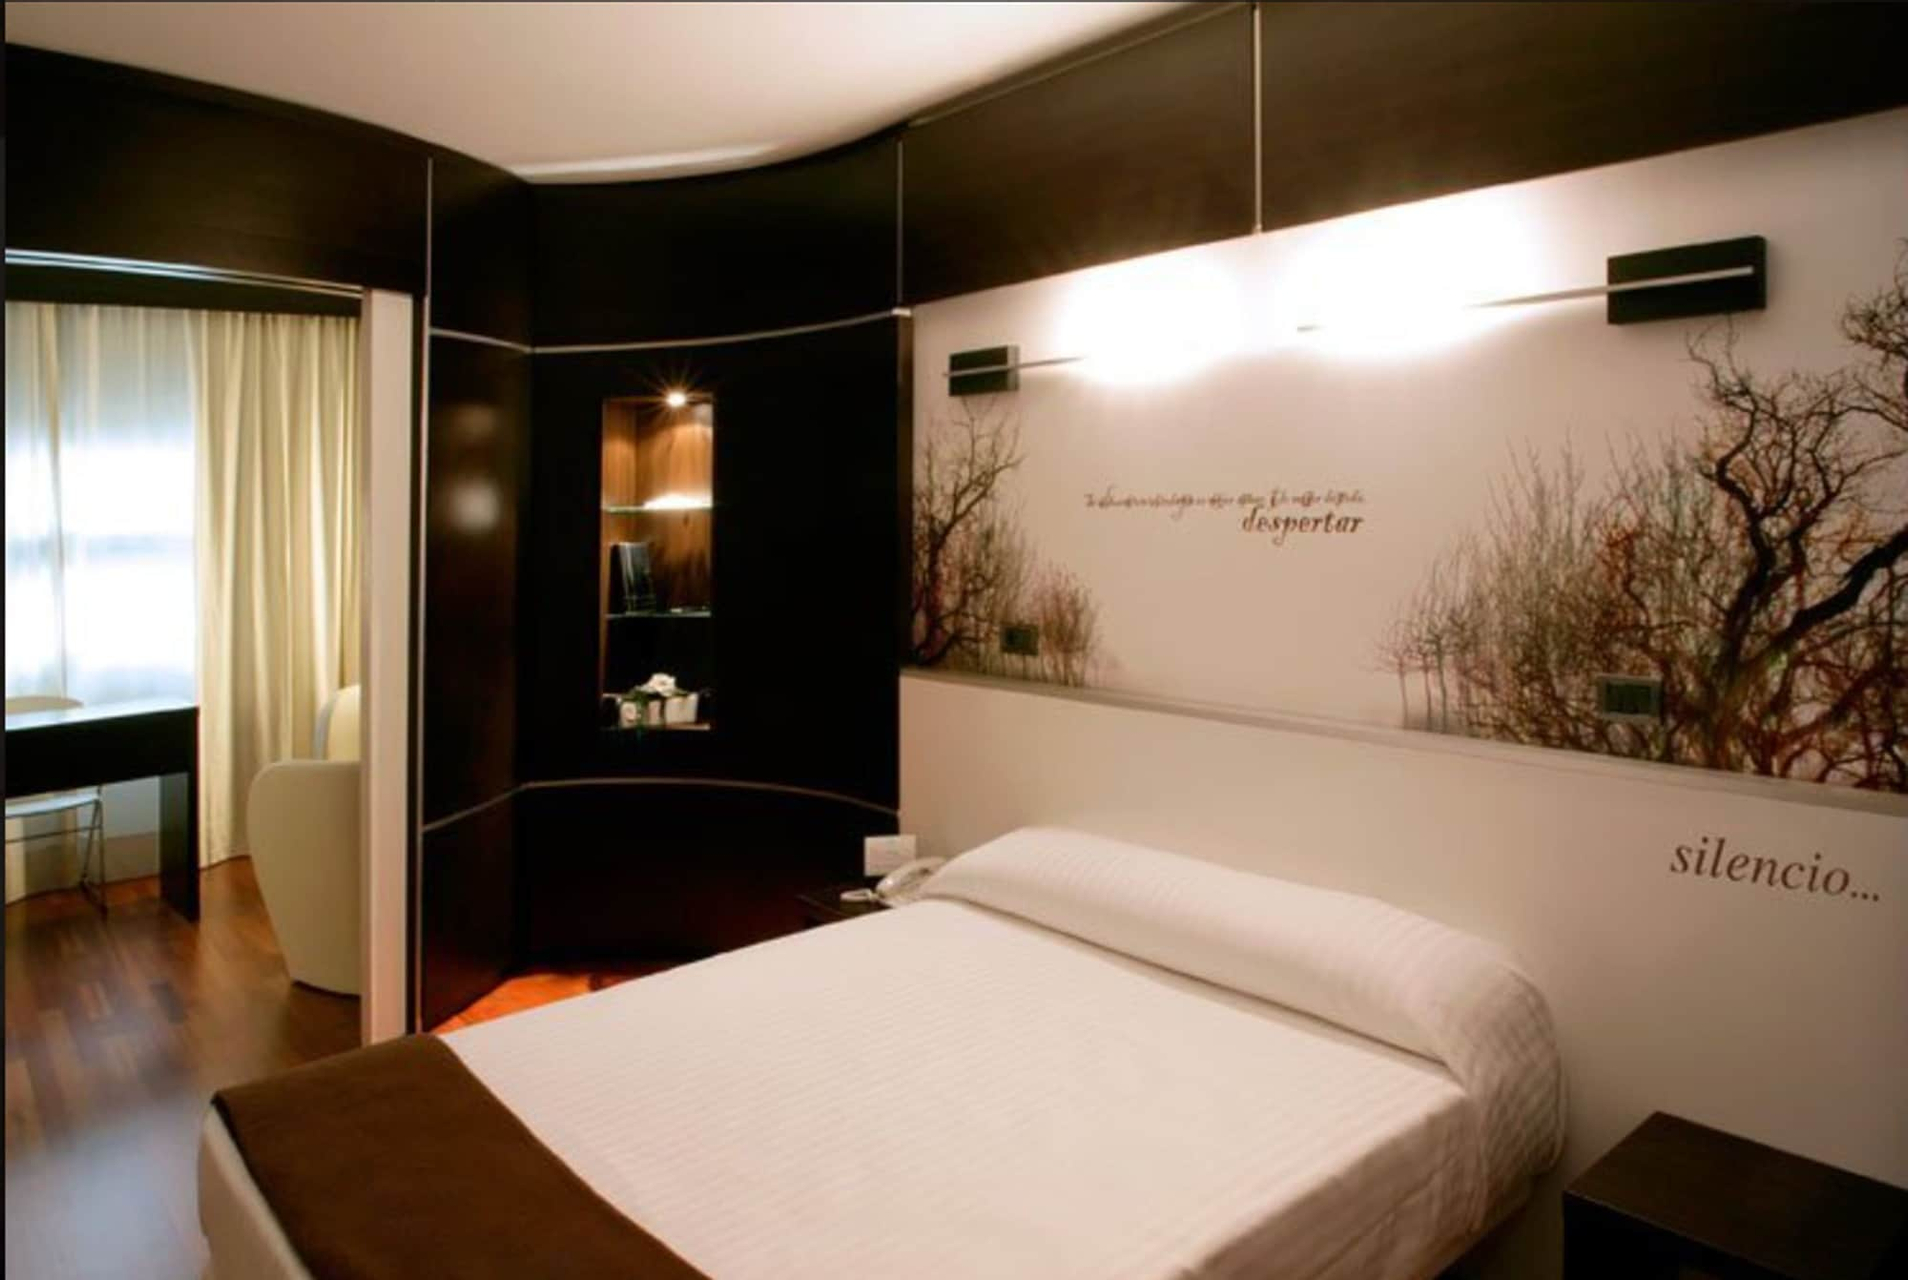 Bedroom 1, Europa, Zaragoza